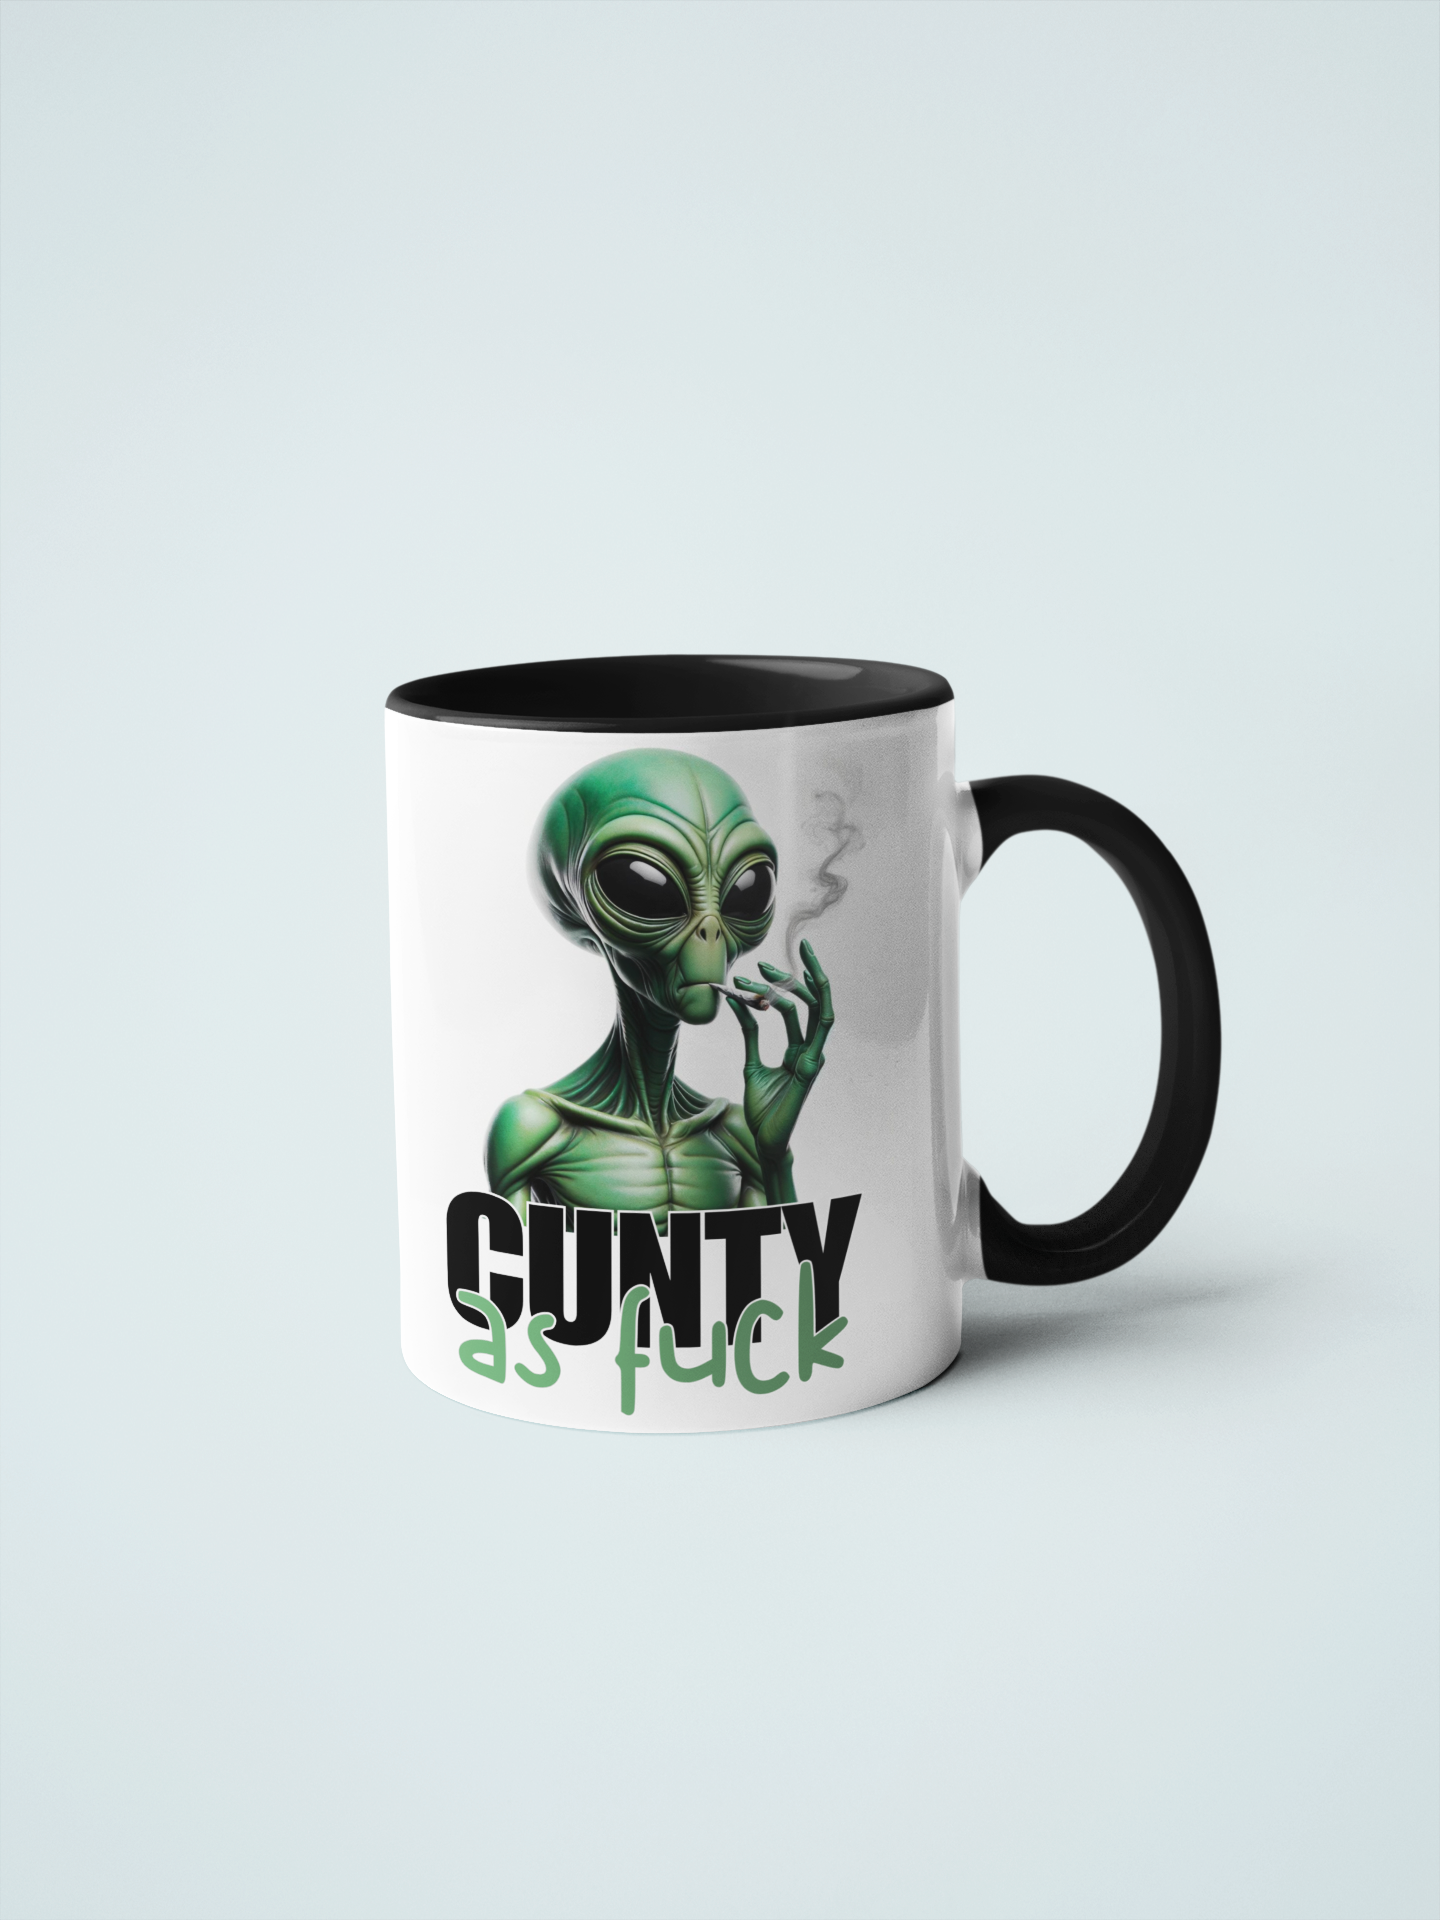 Cunty As Fuck Stoner Alien Mug - Funny Alien Smoking Mug, Quirky Coffee Cup, Hilarious Tea Mug, Humorous weed Coaster